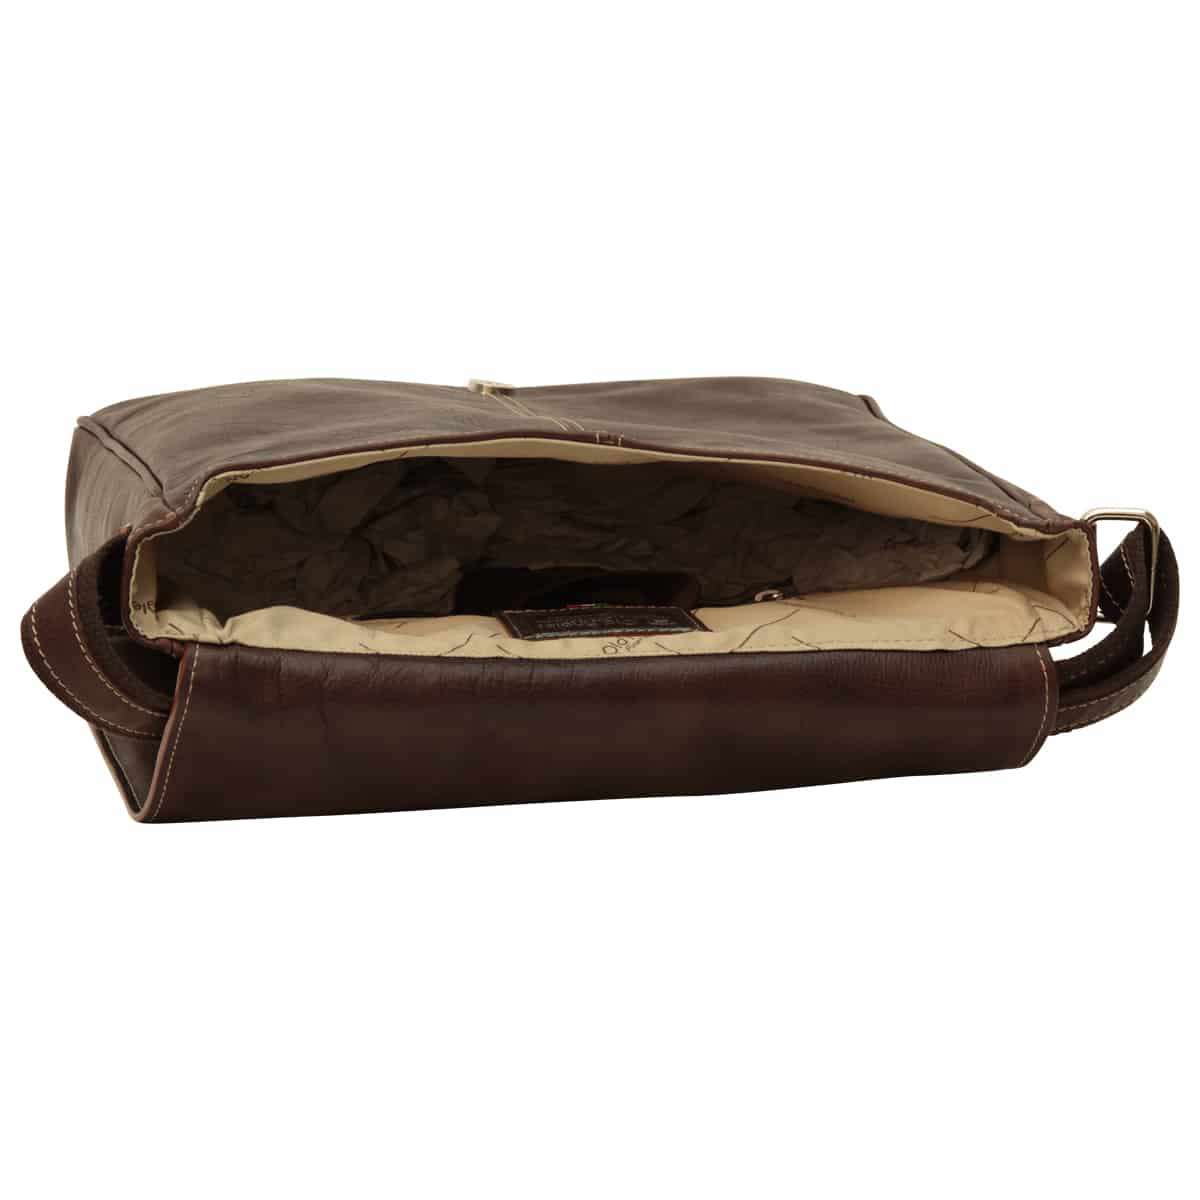 Lightweight Messenger Bag - Dark Brown | 072661TM UK | Old Angler Firenze